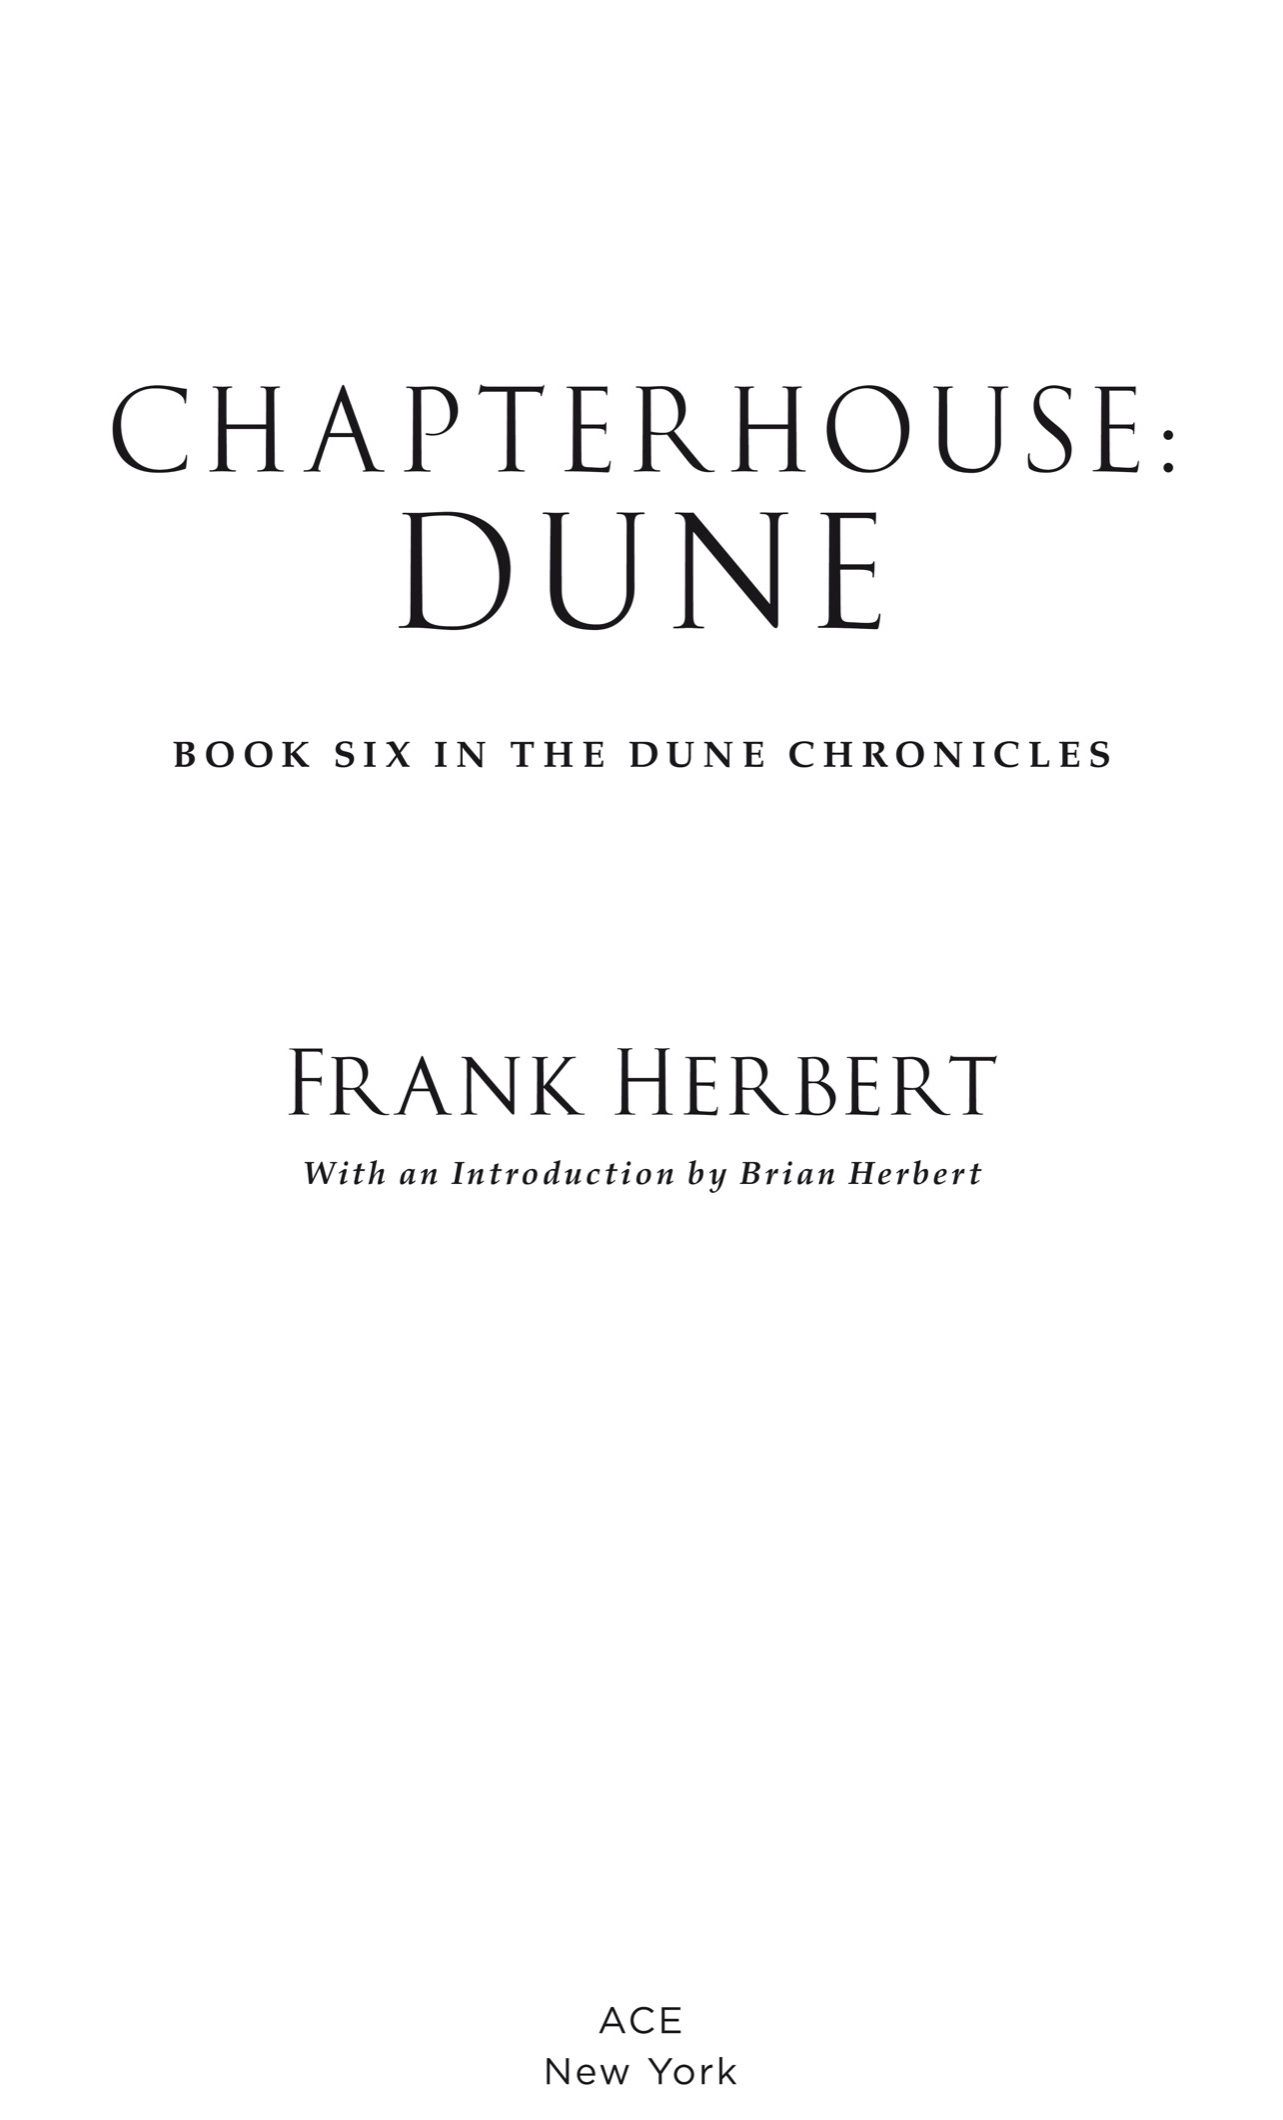 Book title, Chapterhouse: Dune, author, Frank Herbert, imprint, Ace